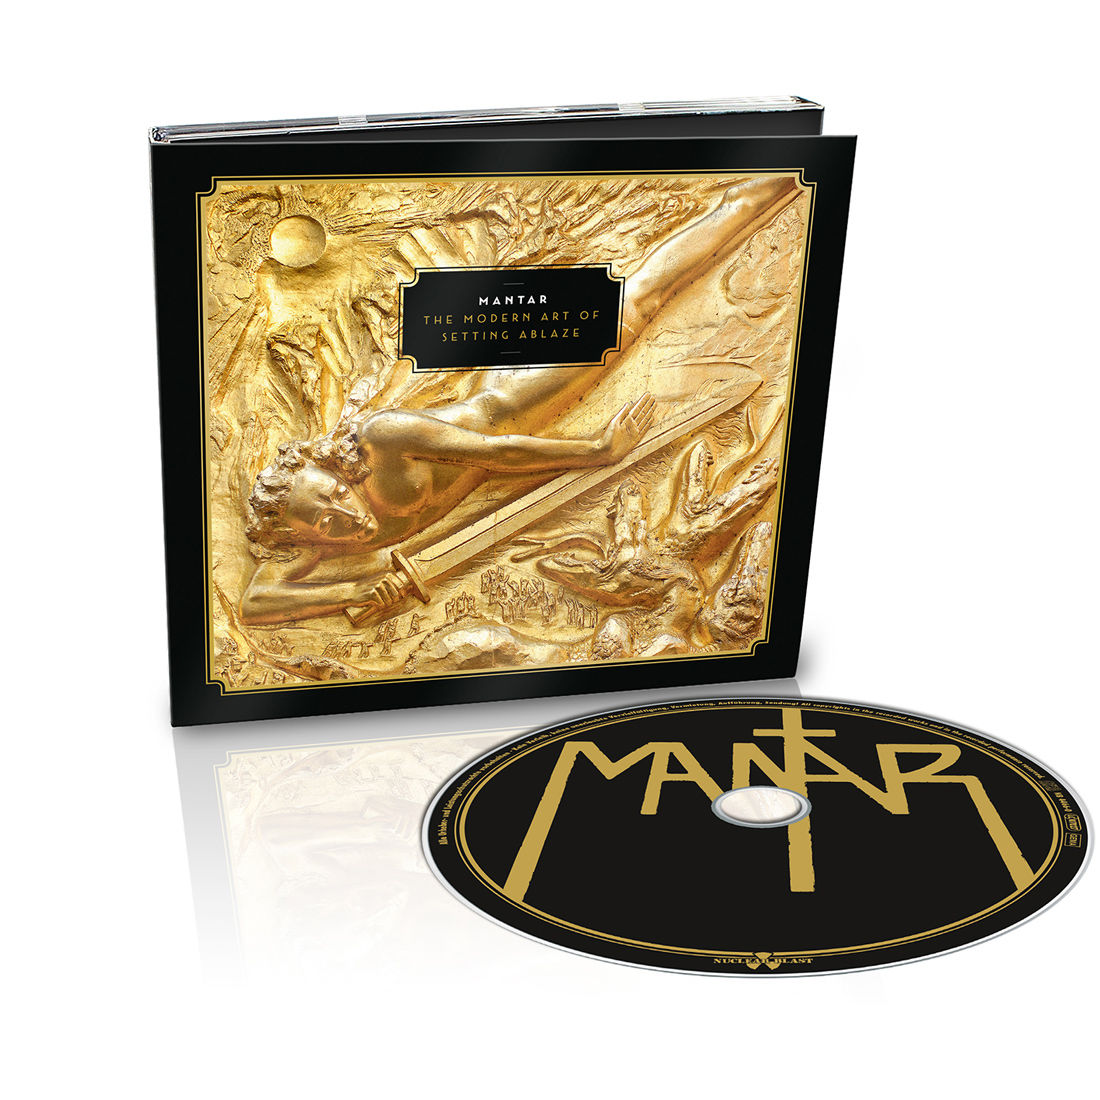 MANTAR - The Modern Art Of Setting Ablaze: Limited CD